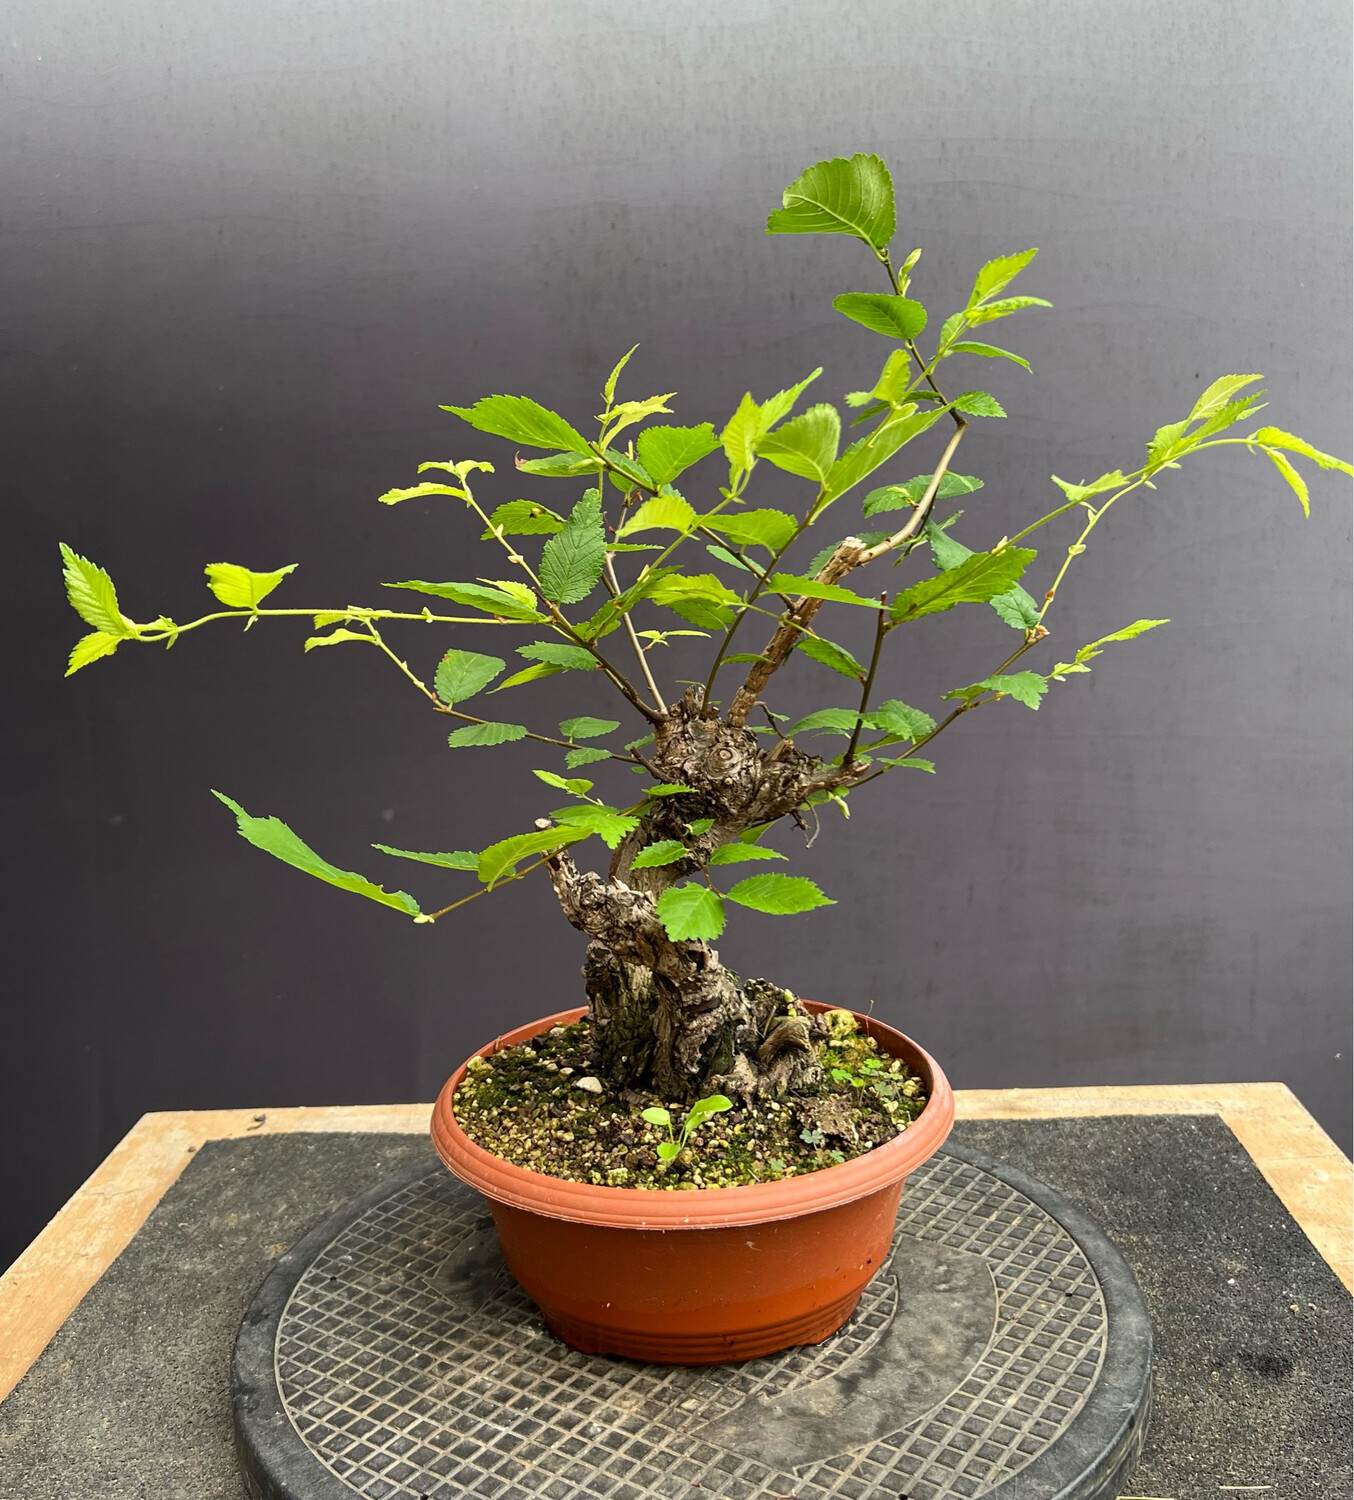 SOLD Ulmus minor/English Elm bonsai material